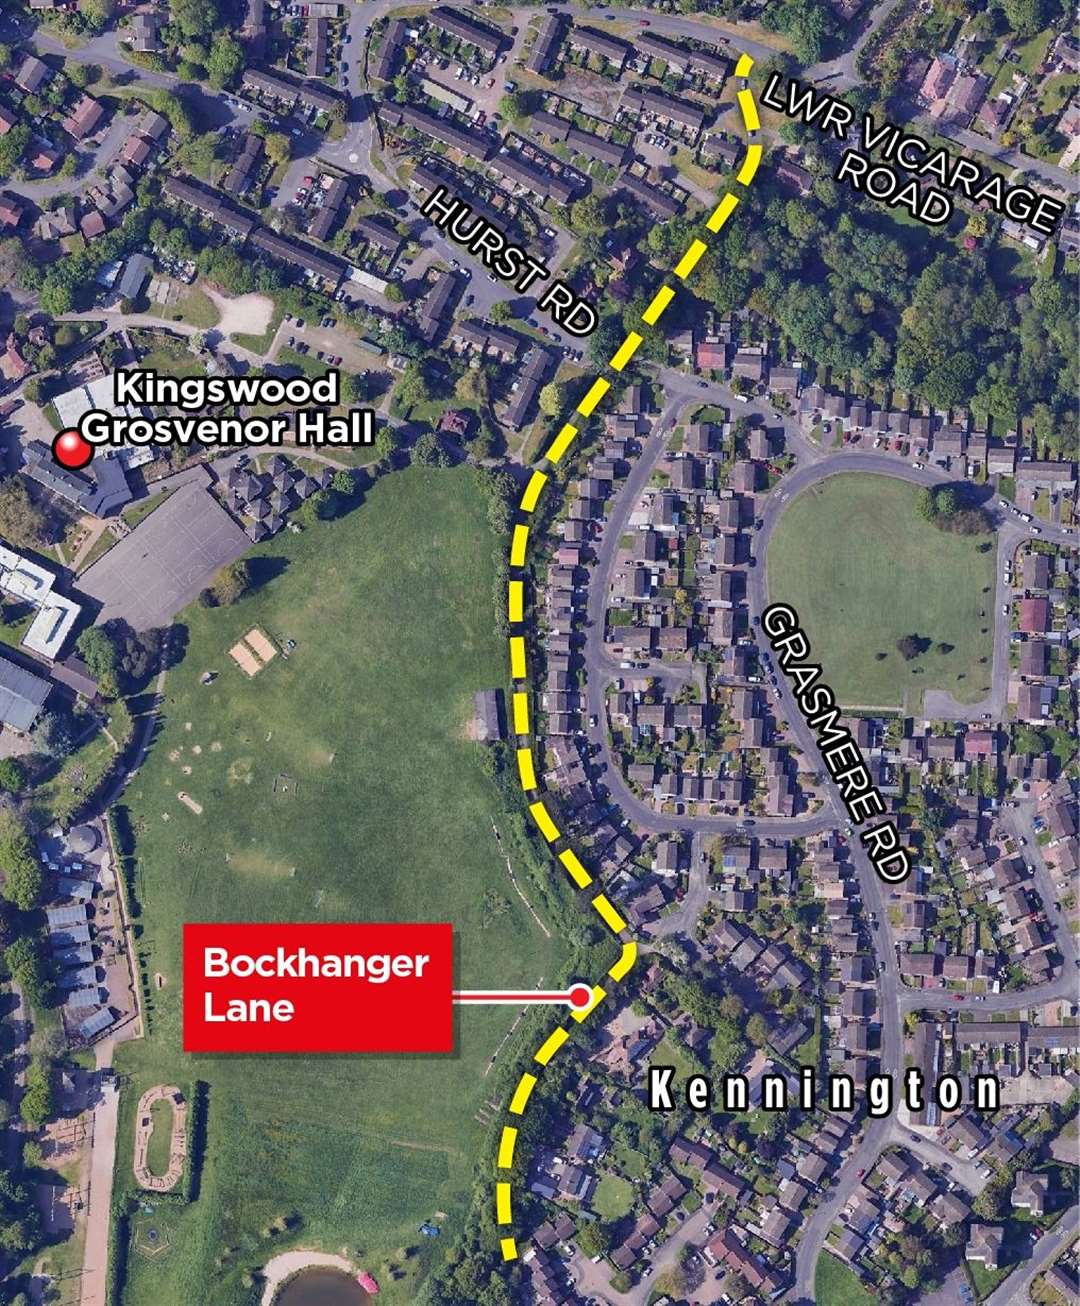 Police are investigating the incident in Bockhanger Lane, Kennington